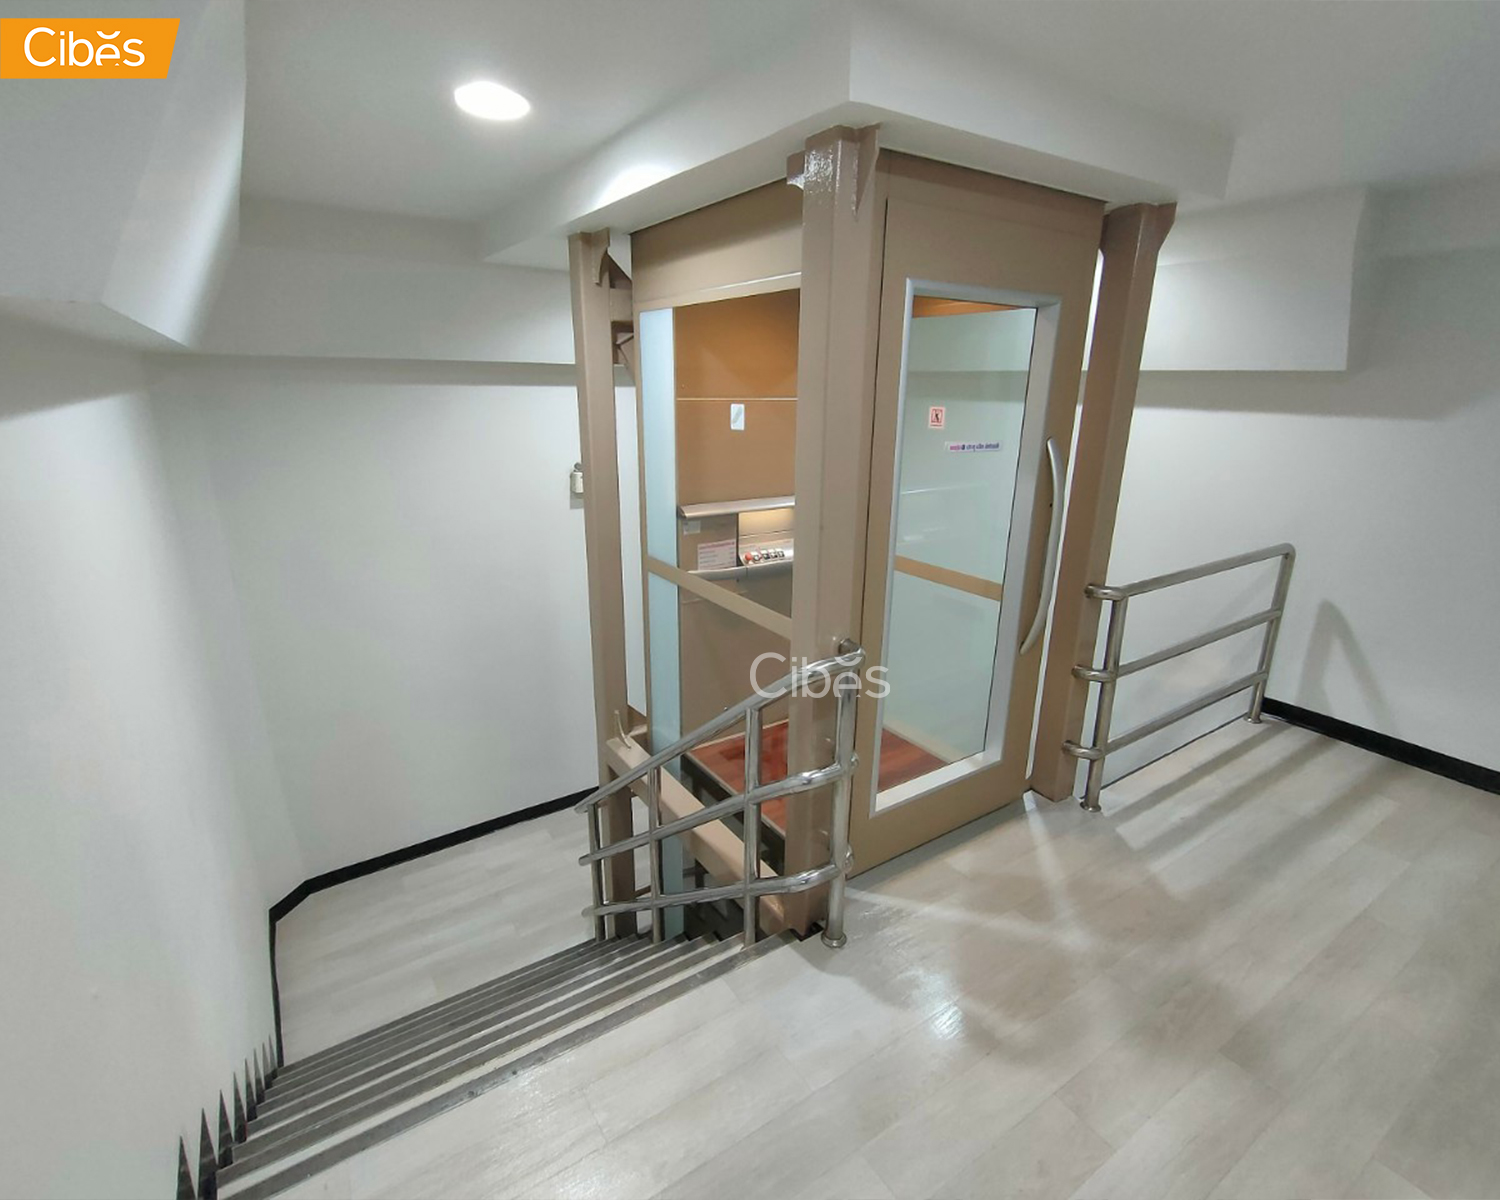 9Private ลิฟต์บ้าน ซีเบส ลิฟท์ Home Elevator Cibes Lift 1000x930OrientalGreyBeigenatt2